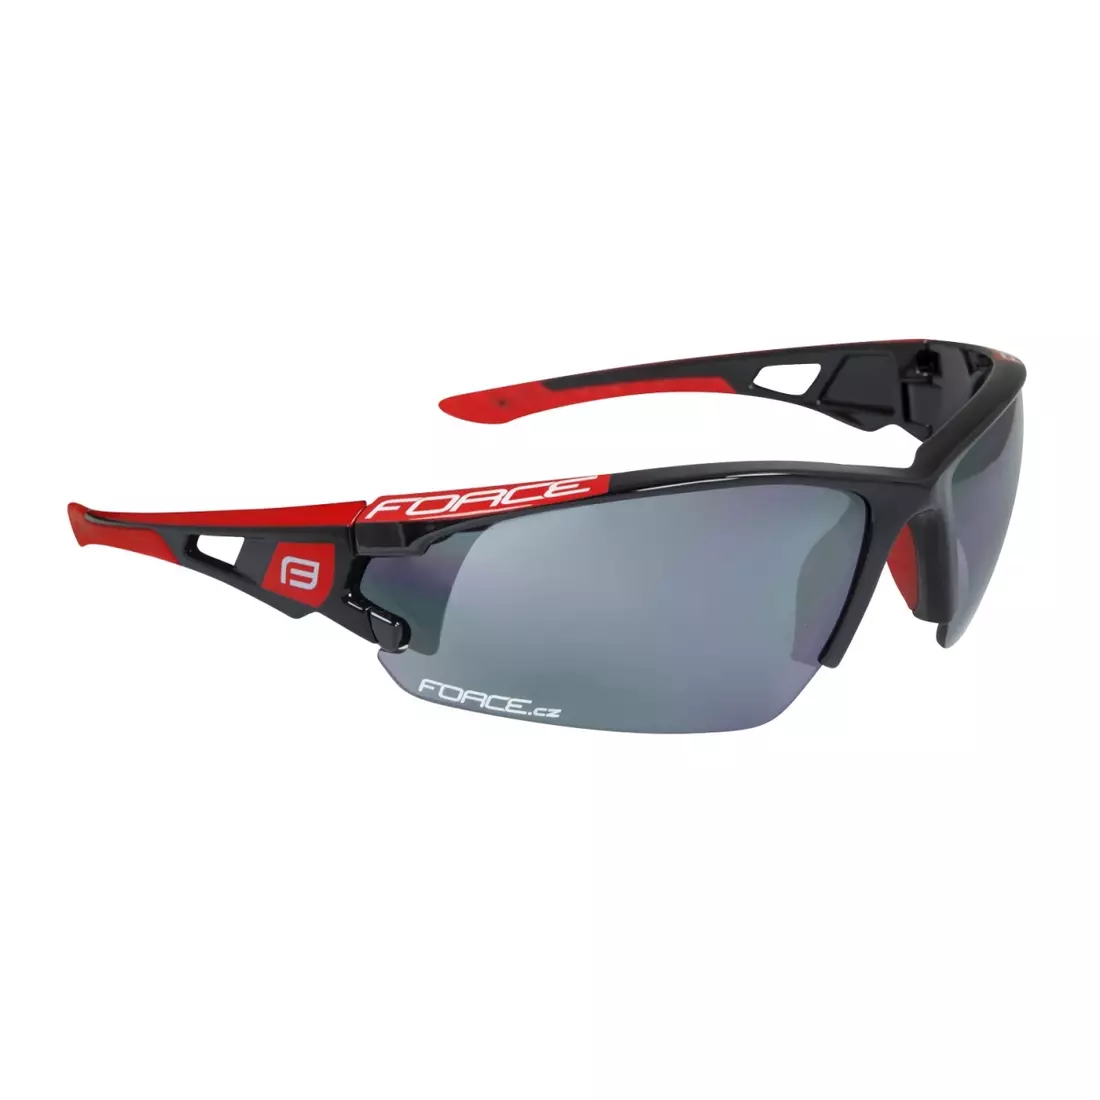 FORCE ochelari sport cu lentile înlocuibile aethon CALIBRE, negru și roșu 91053